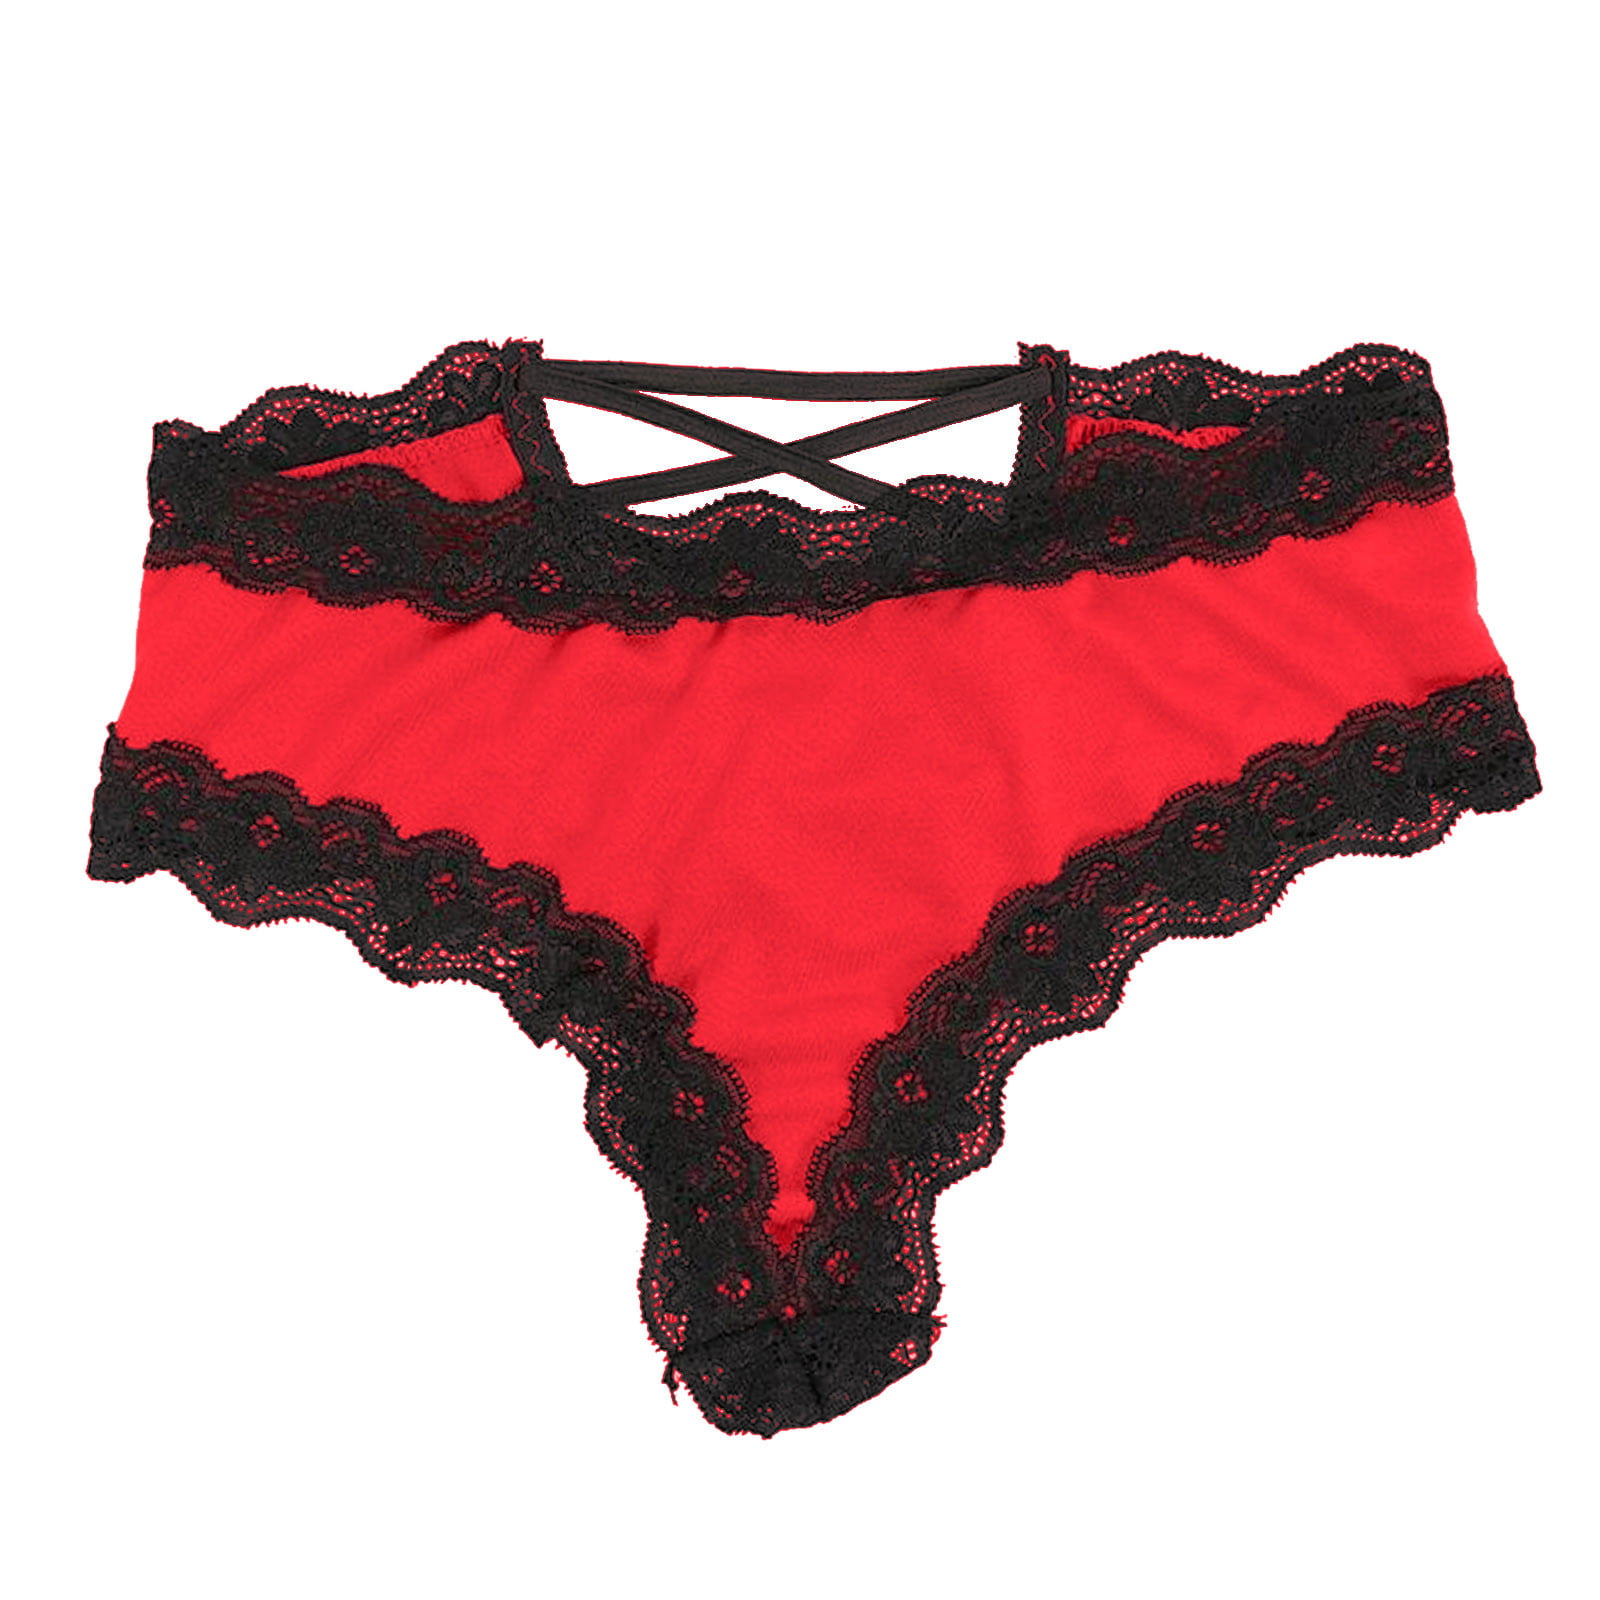 adviicd High Waist Panties Teen Girls Underwear 4Panties Leak-Proof Organic  Cotton Protective Briefs Hot Pink Small